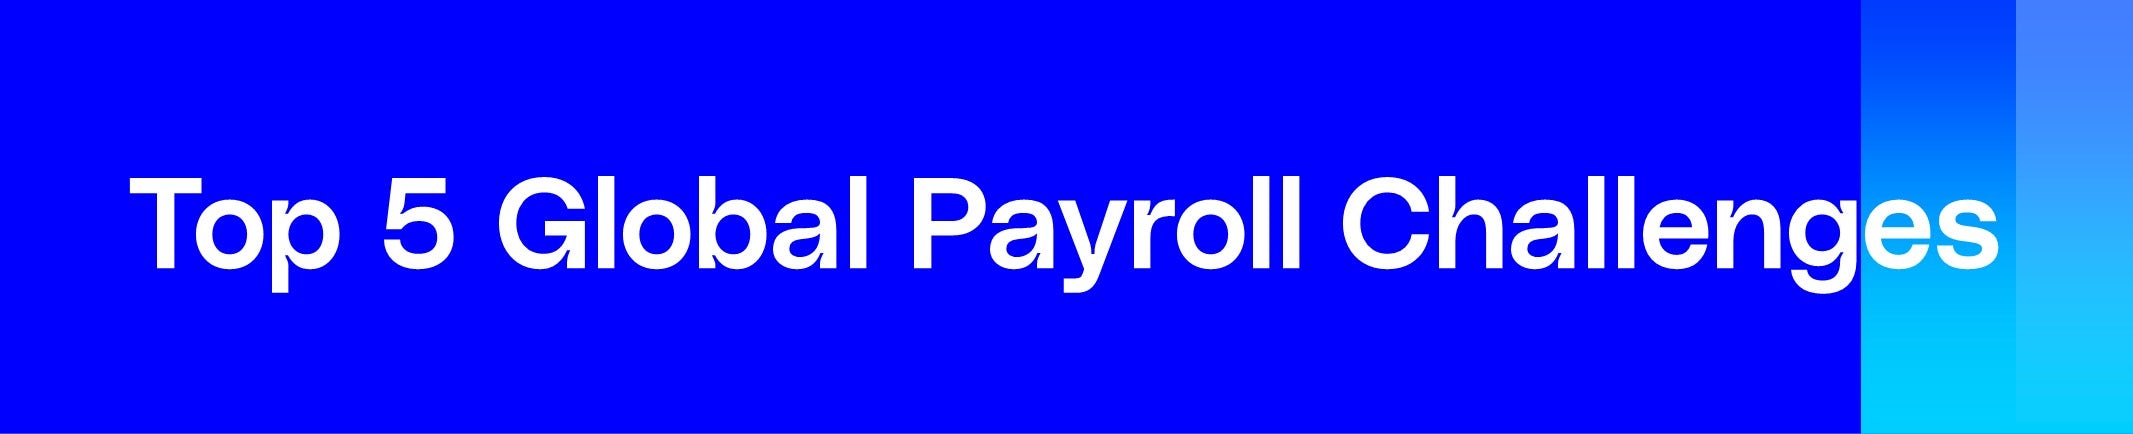 Top 5 Payroll Challenges Chart Header